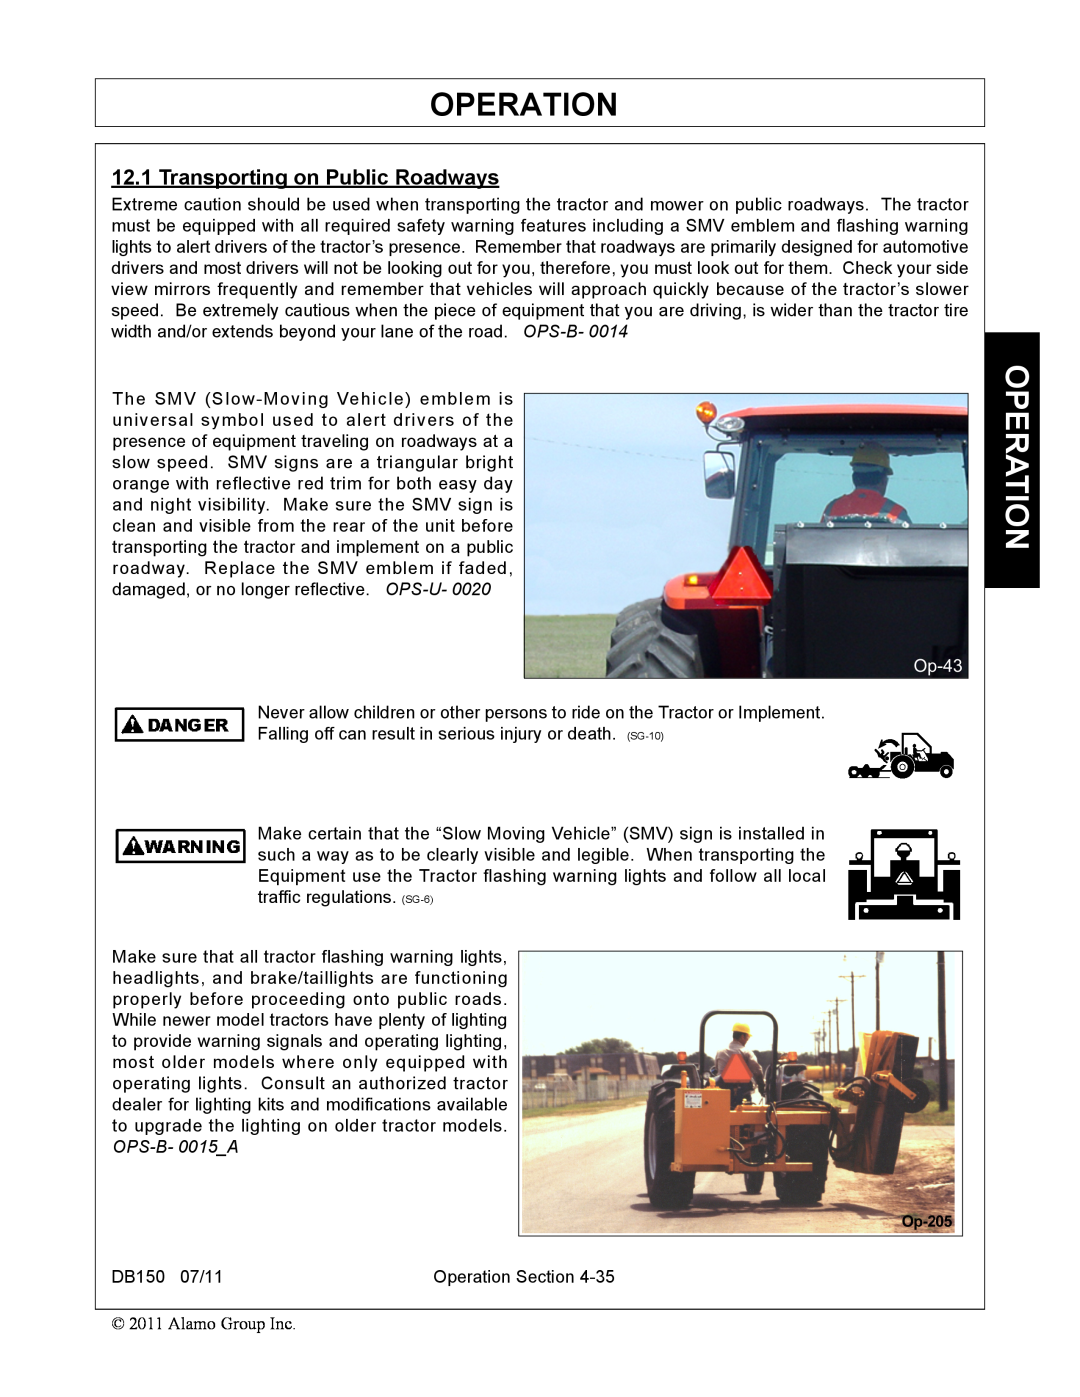 Rhino Mounts DB150 manual Operation, Transporting on Public Roadways 